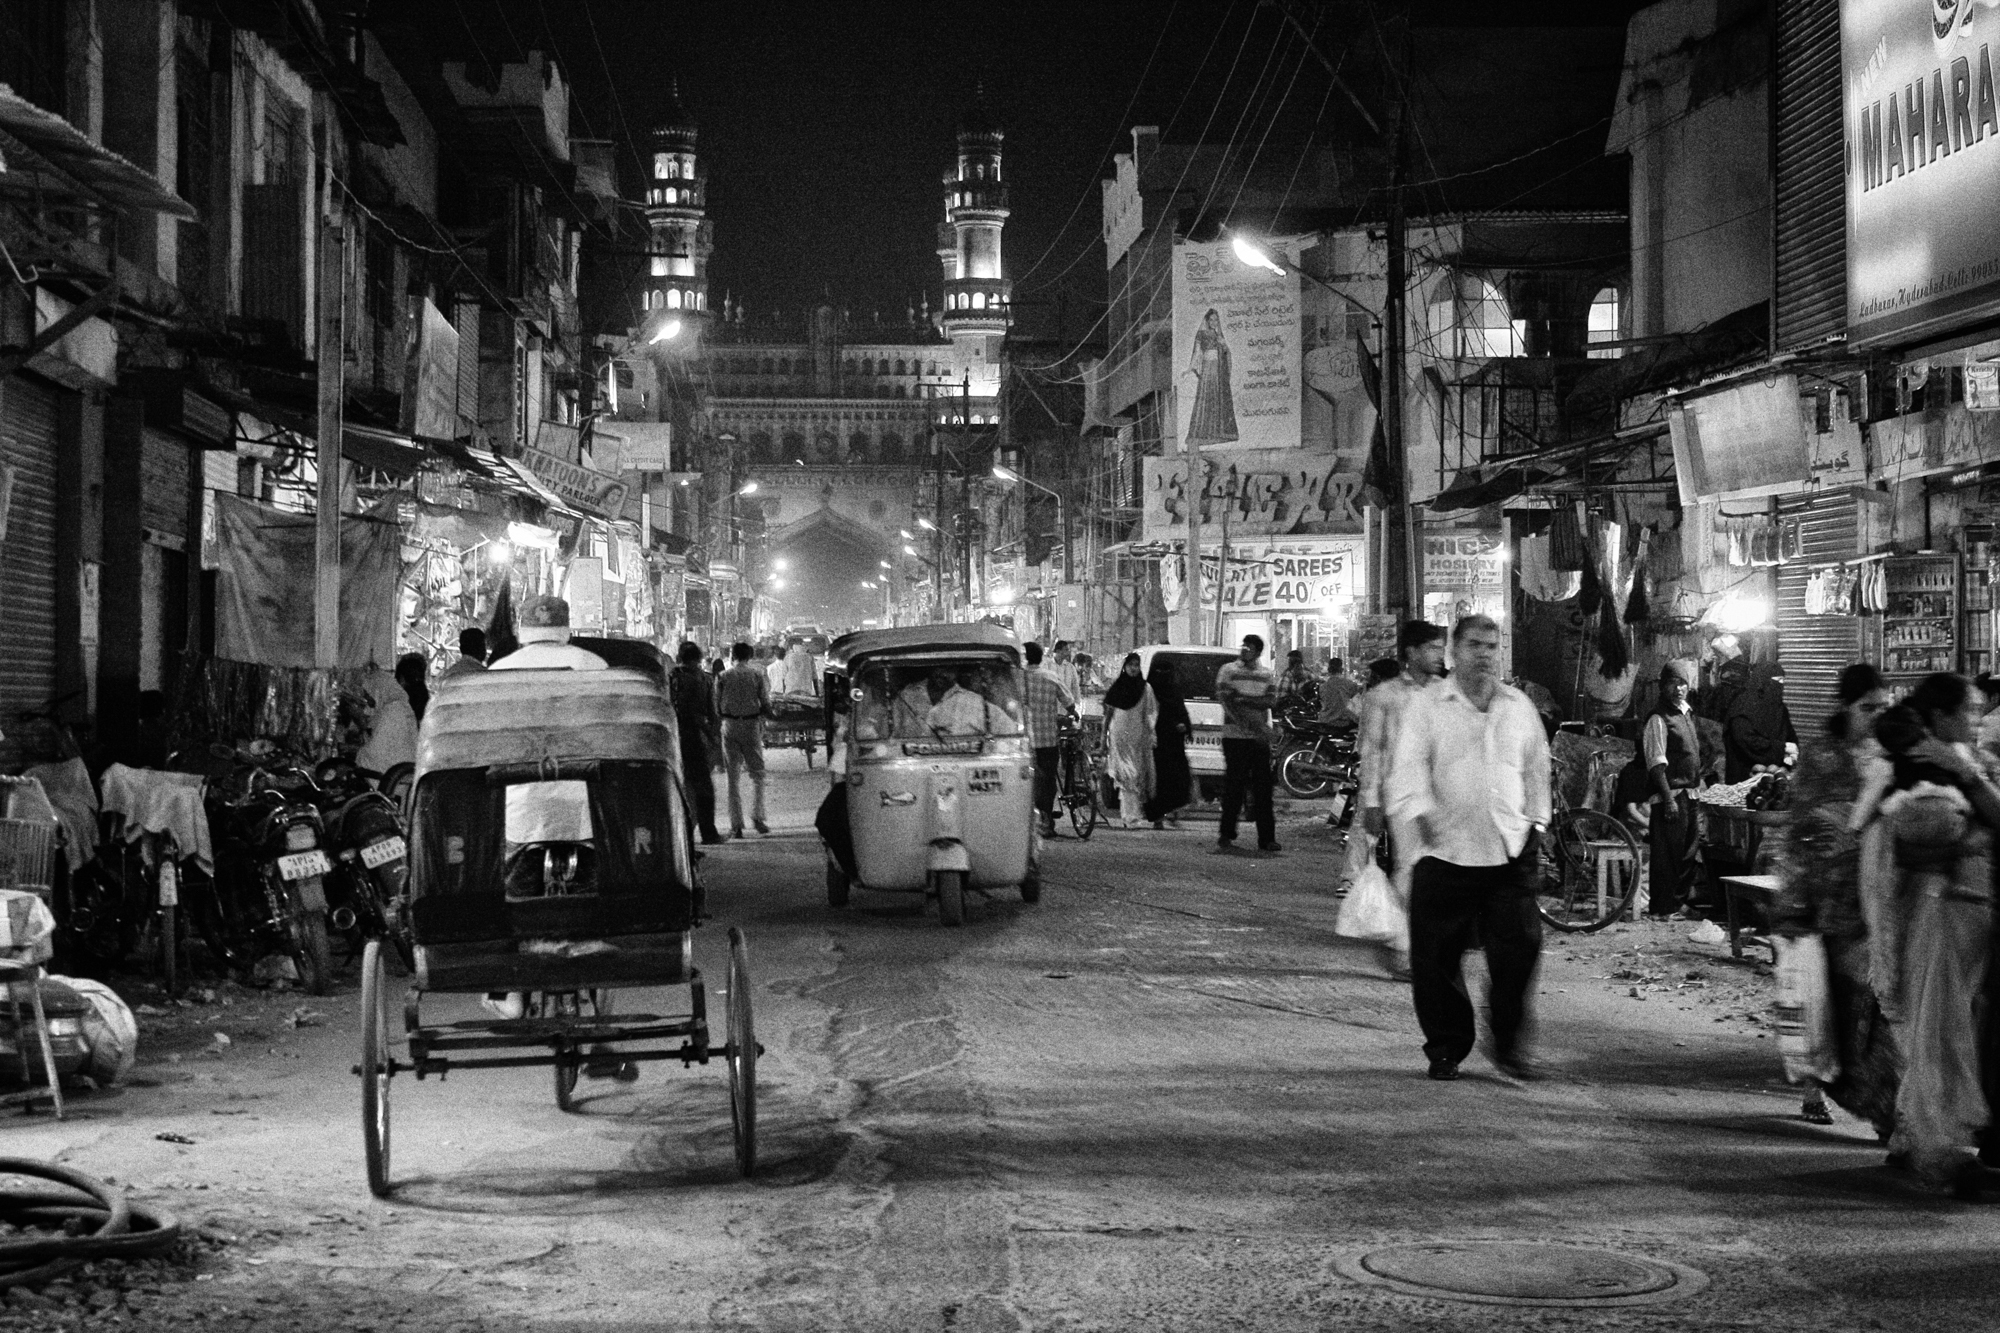 Hyderabad, India